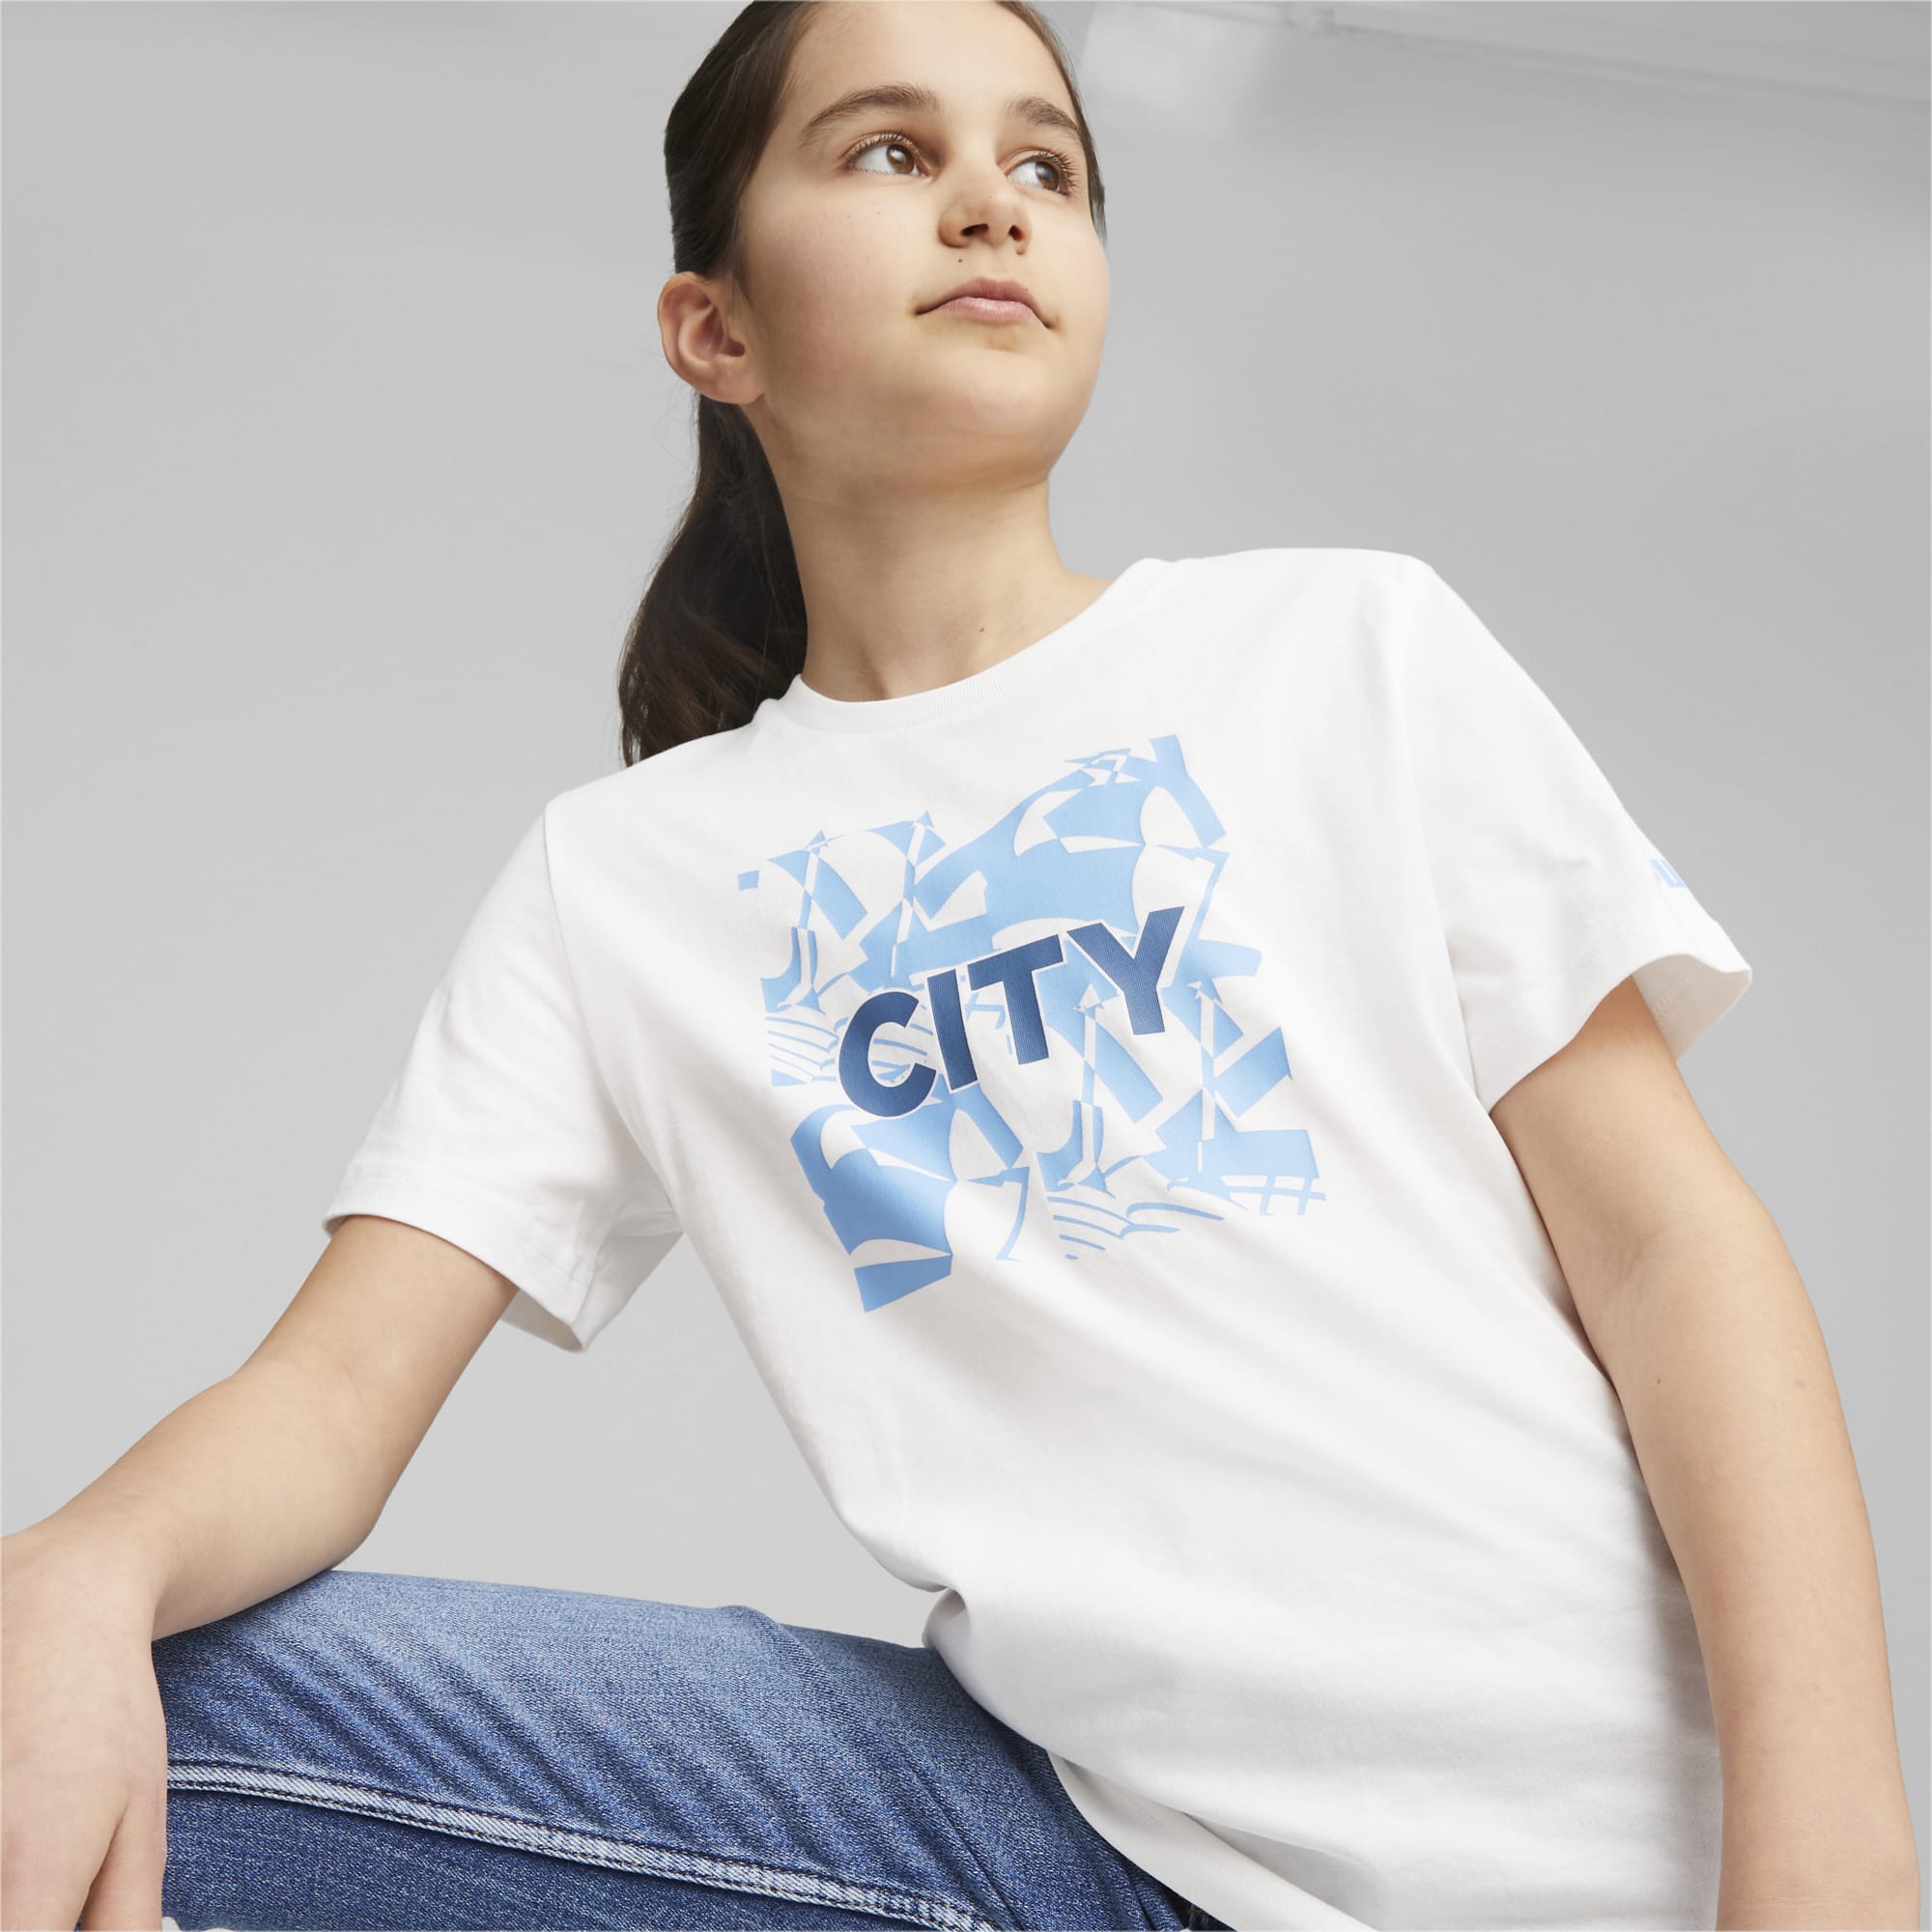 PUMA Manchester City Ftblcore Youth Graphic T-Shirt, White/Light Blue